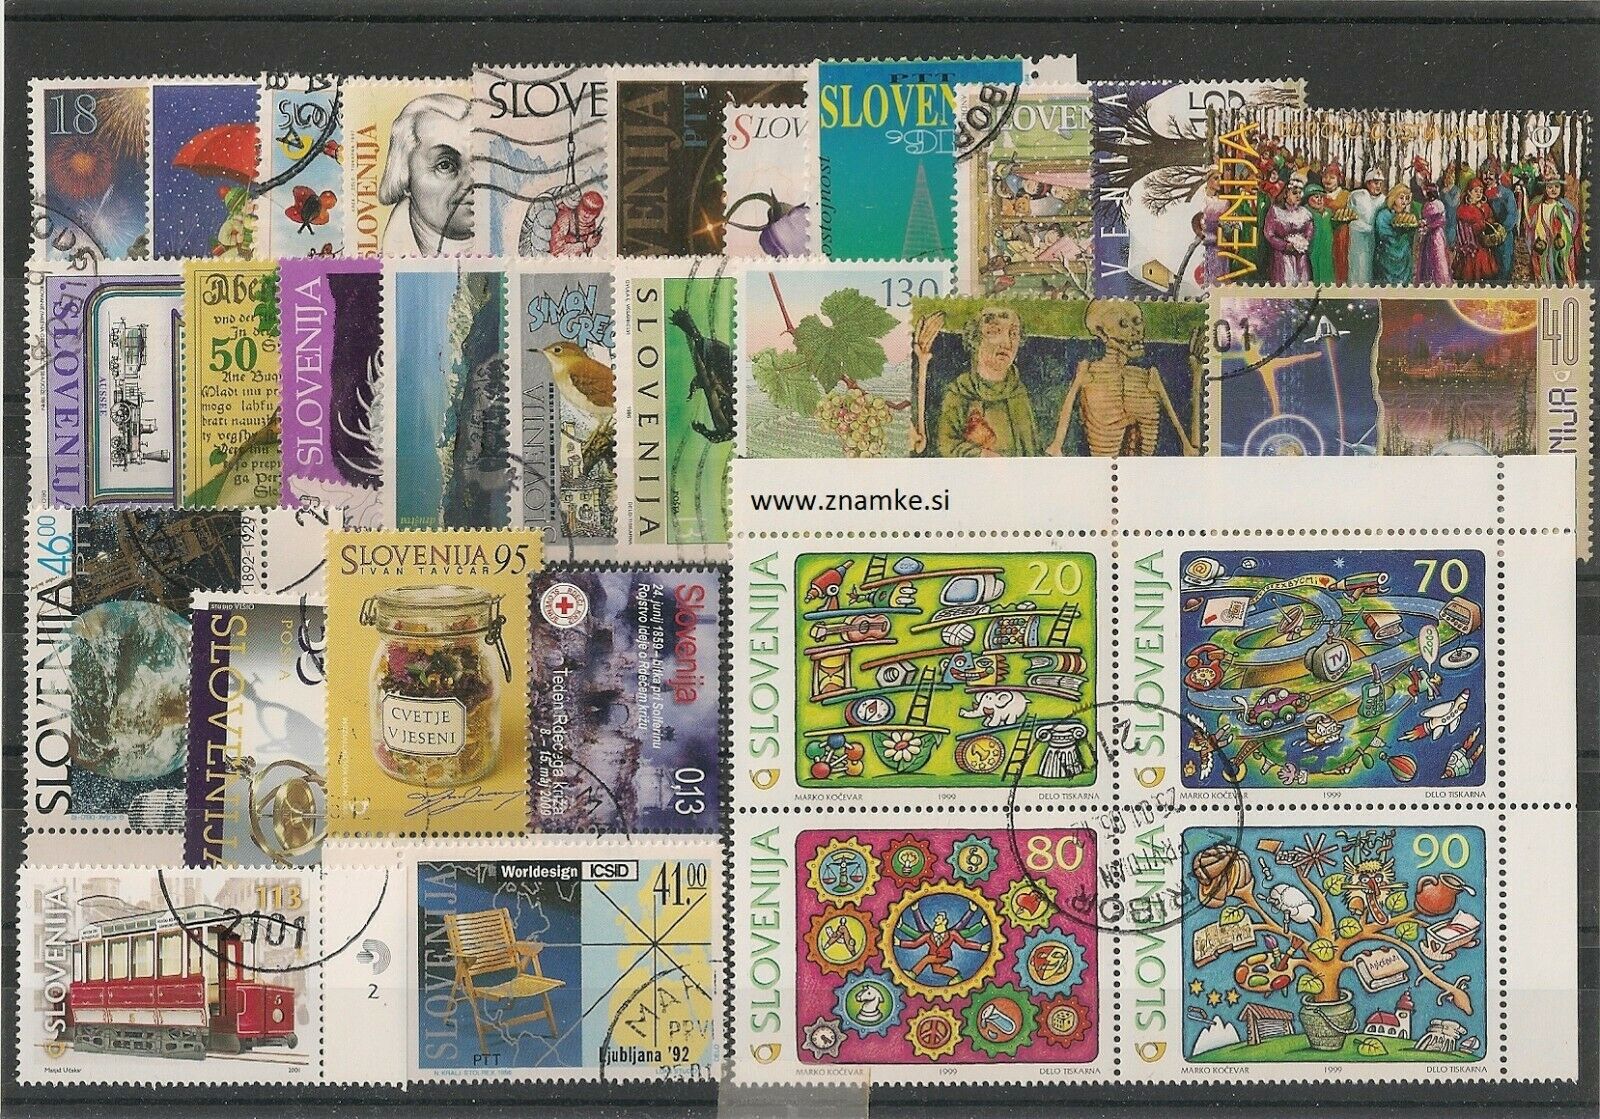 Slovenia 50 Stamps